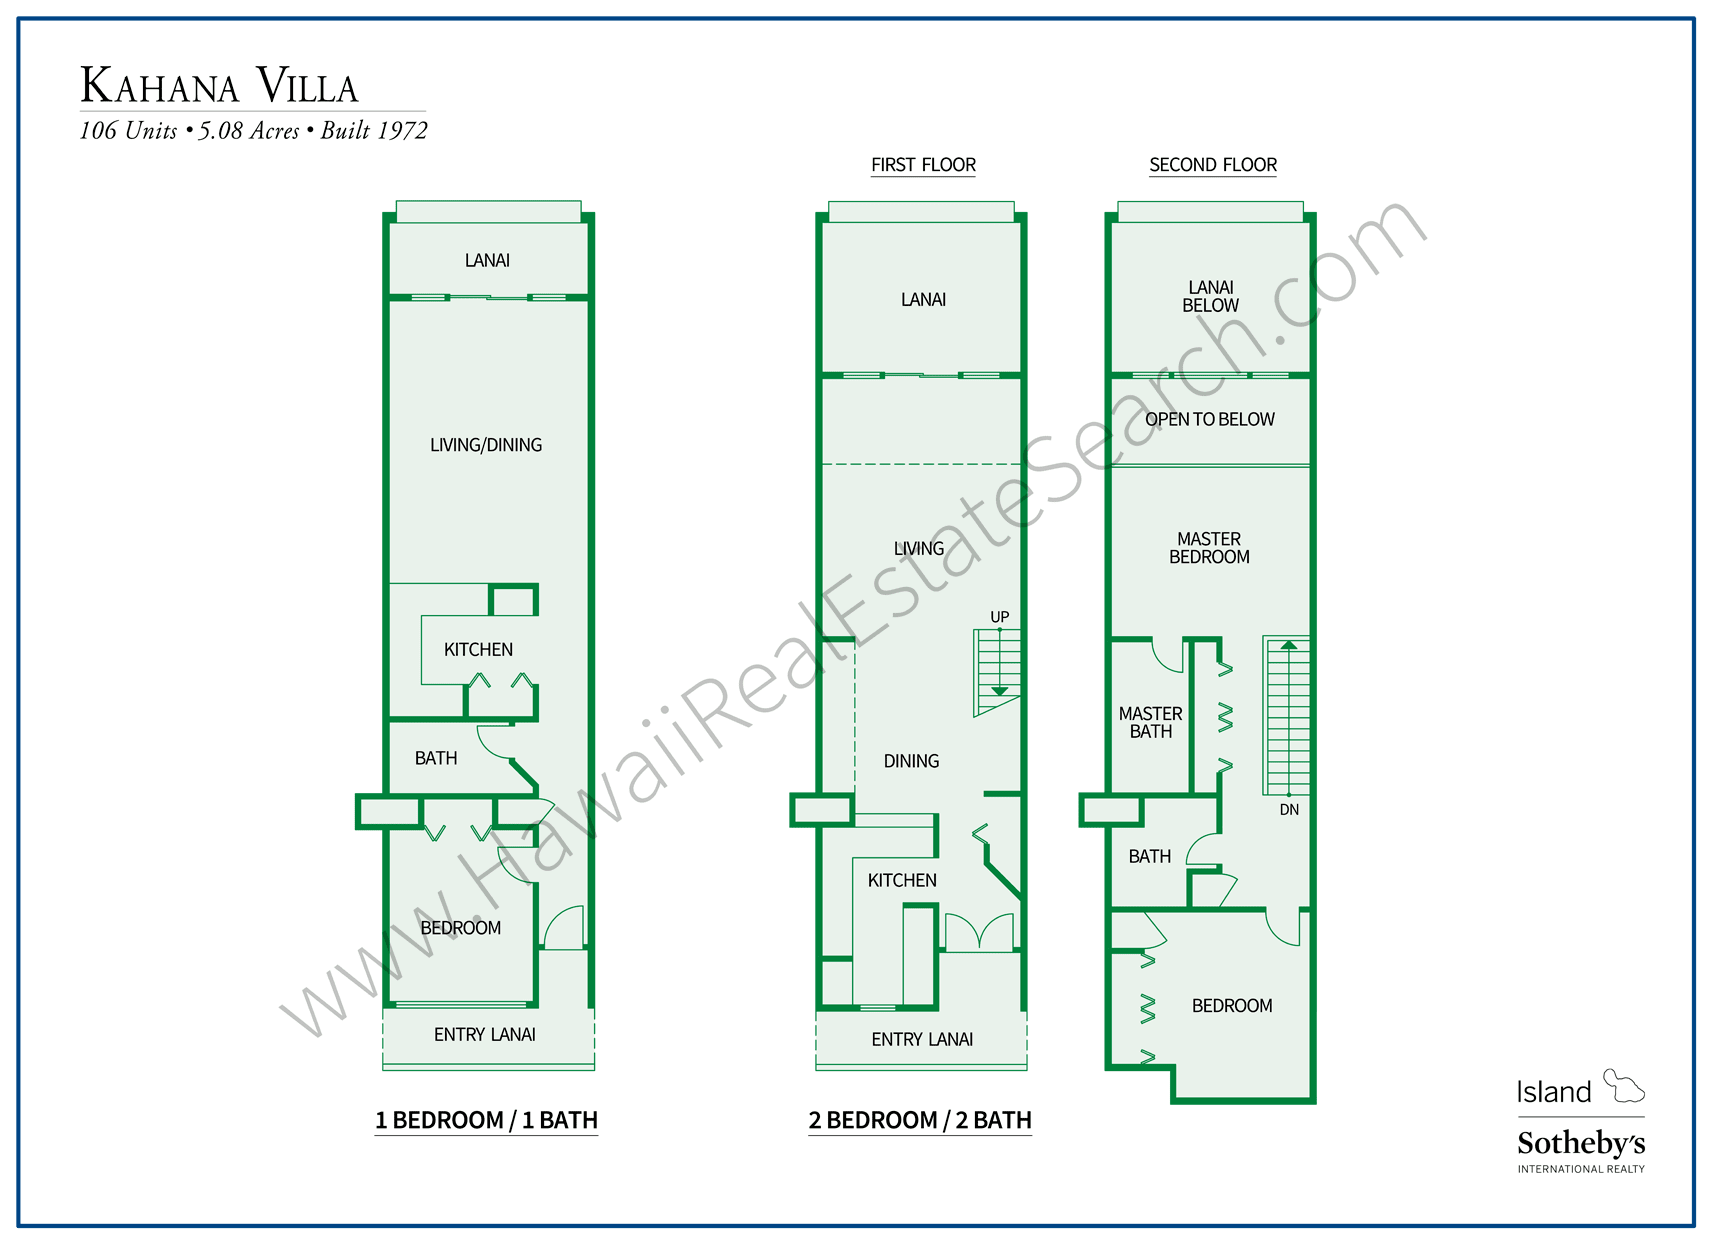 Kahana Villa Floor Plans